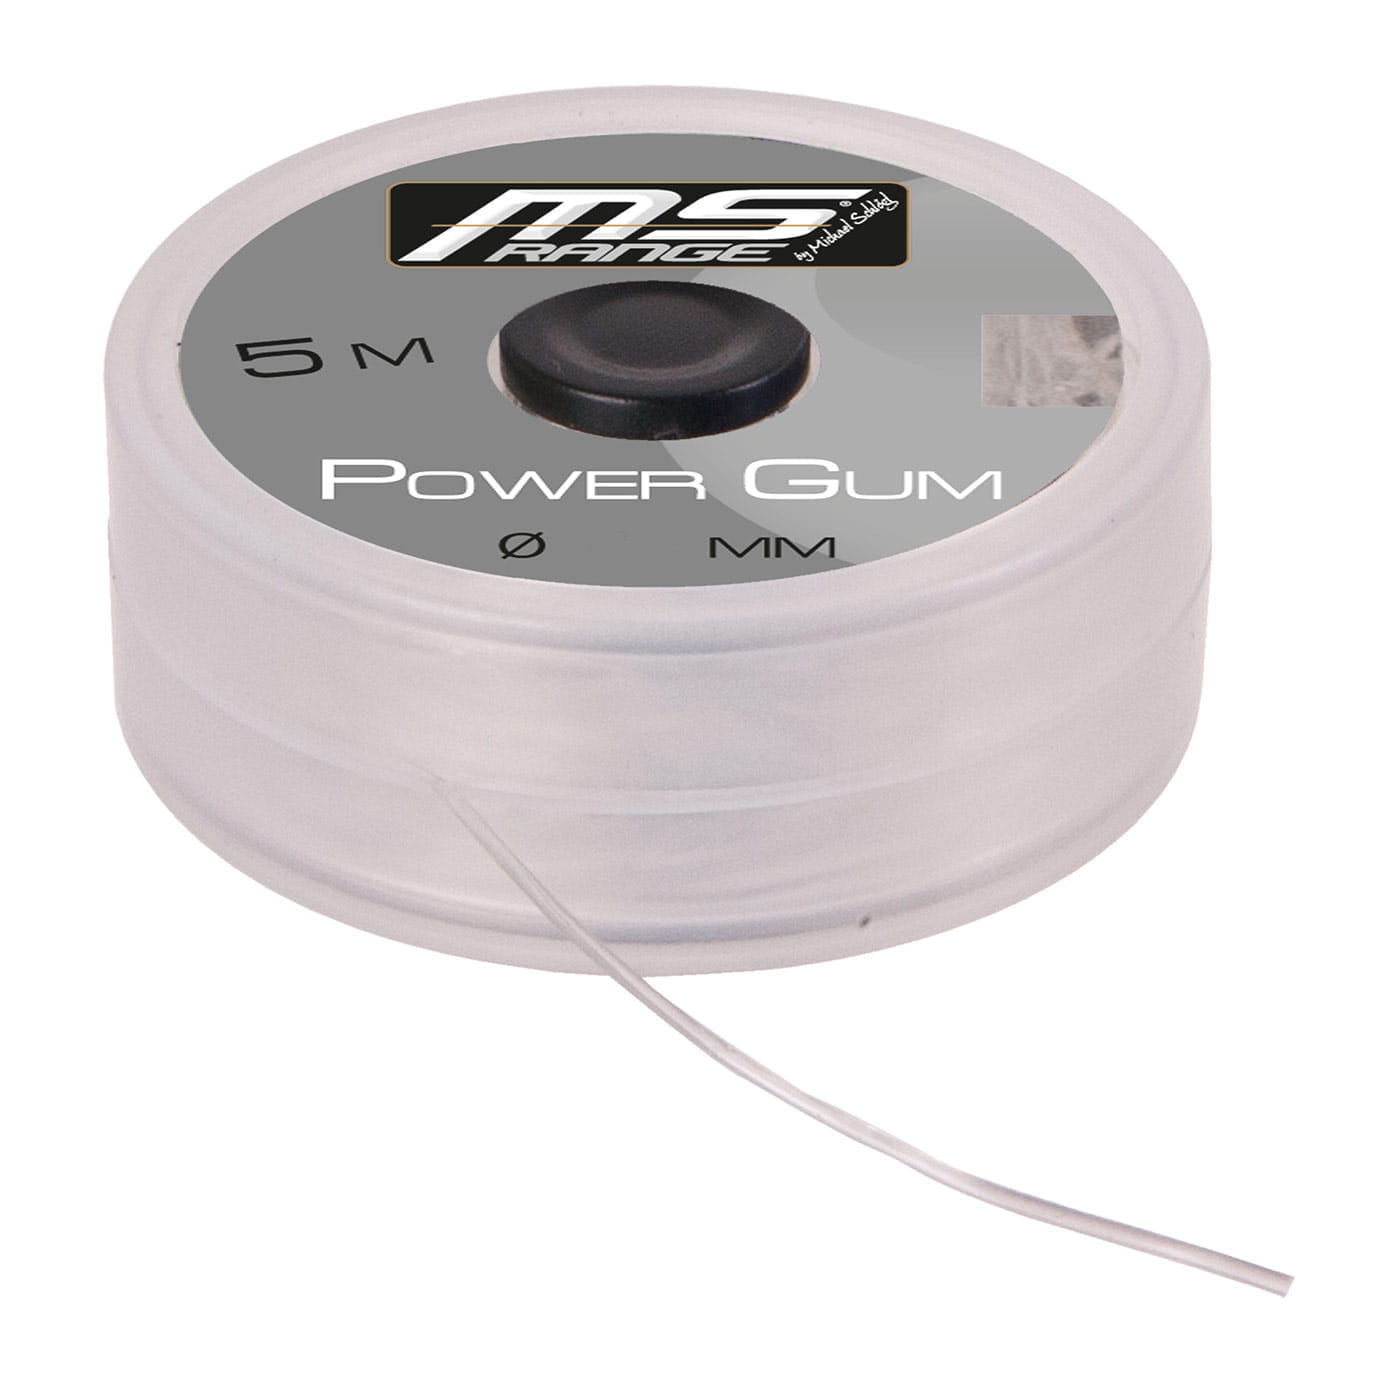 MS Range Power Gum 5m